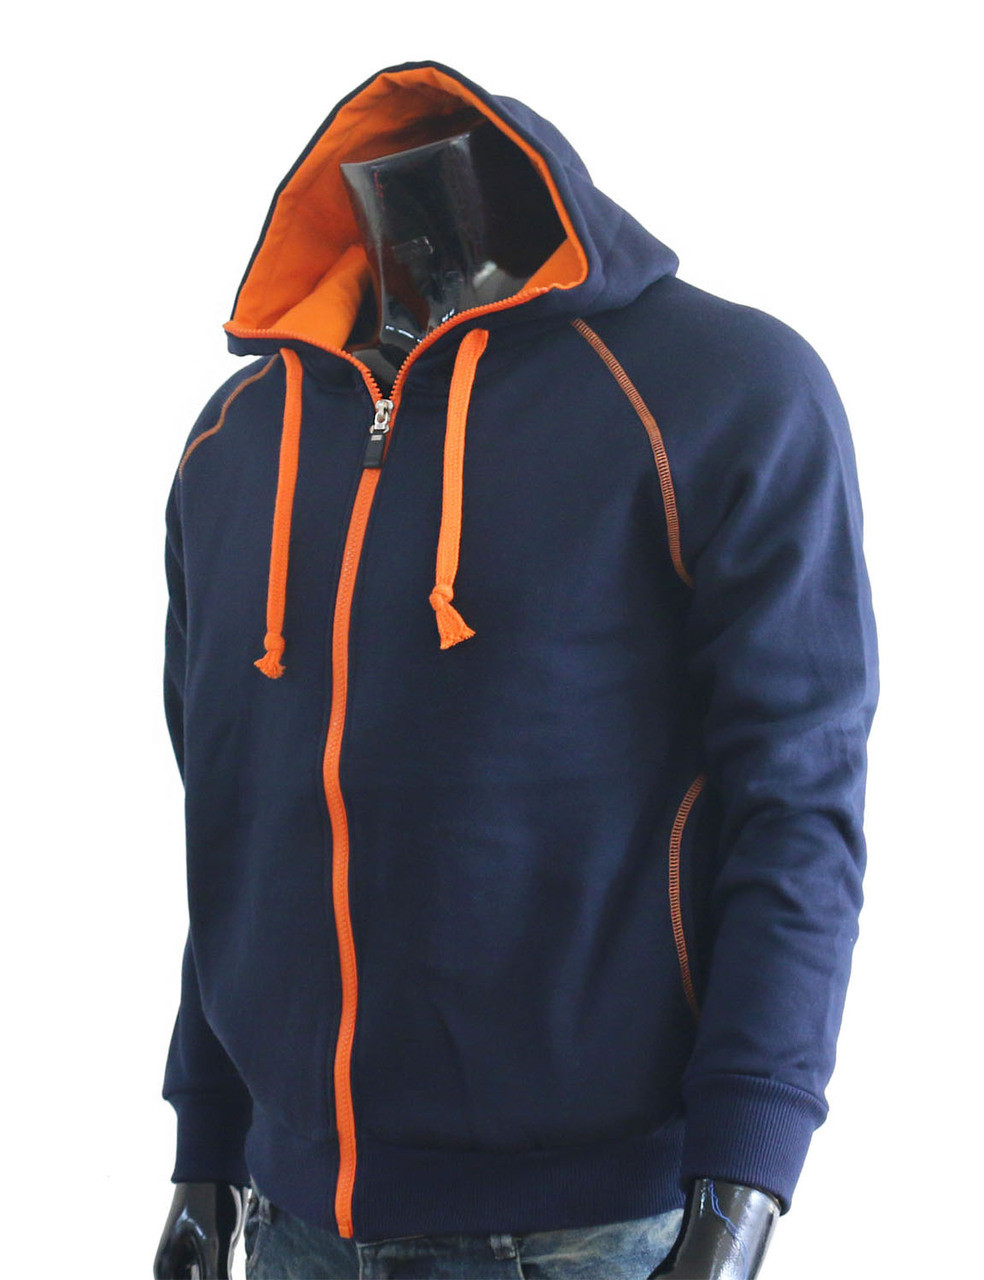 Casual warm sweat zip-Hoodie jumper of orange color hoodie zip-up jacket.  (Navy)